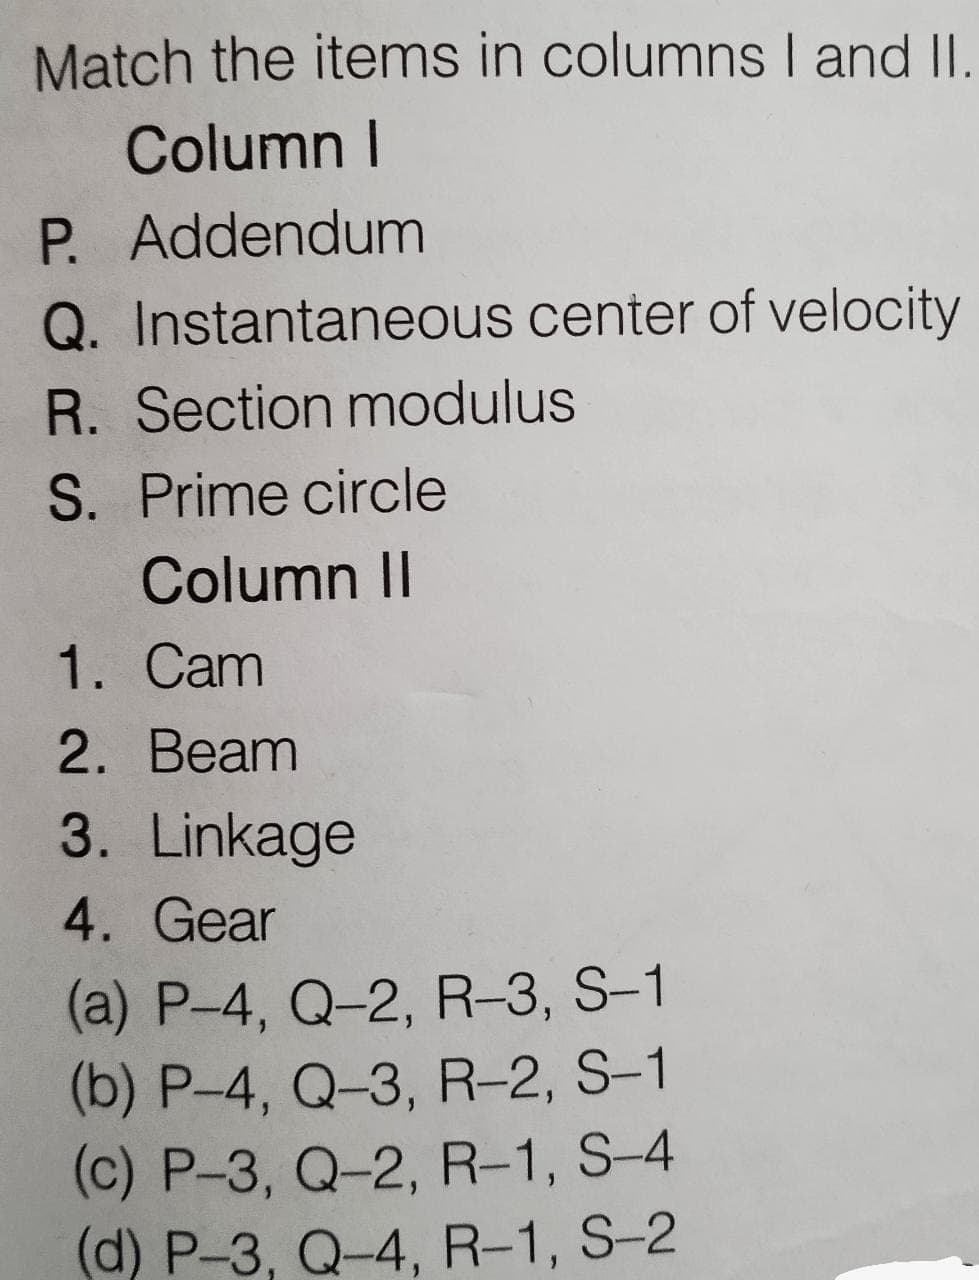 Match the items in columnsI and II.
Column I
P. Addendum
Q. Instantaneous center of velocity
R. Section modulus
S. Prime circle
Column II
1. Cam
2. Beam
3. Linkage
4. Gear
(a) P-4, Q-2, R-3, S-1
(b) P-4, Q-3, R-2, S-1
(c) P-3, Q-2, R-1, S-4
(d) P-3, Q-4, R-1, S-2
